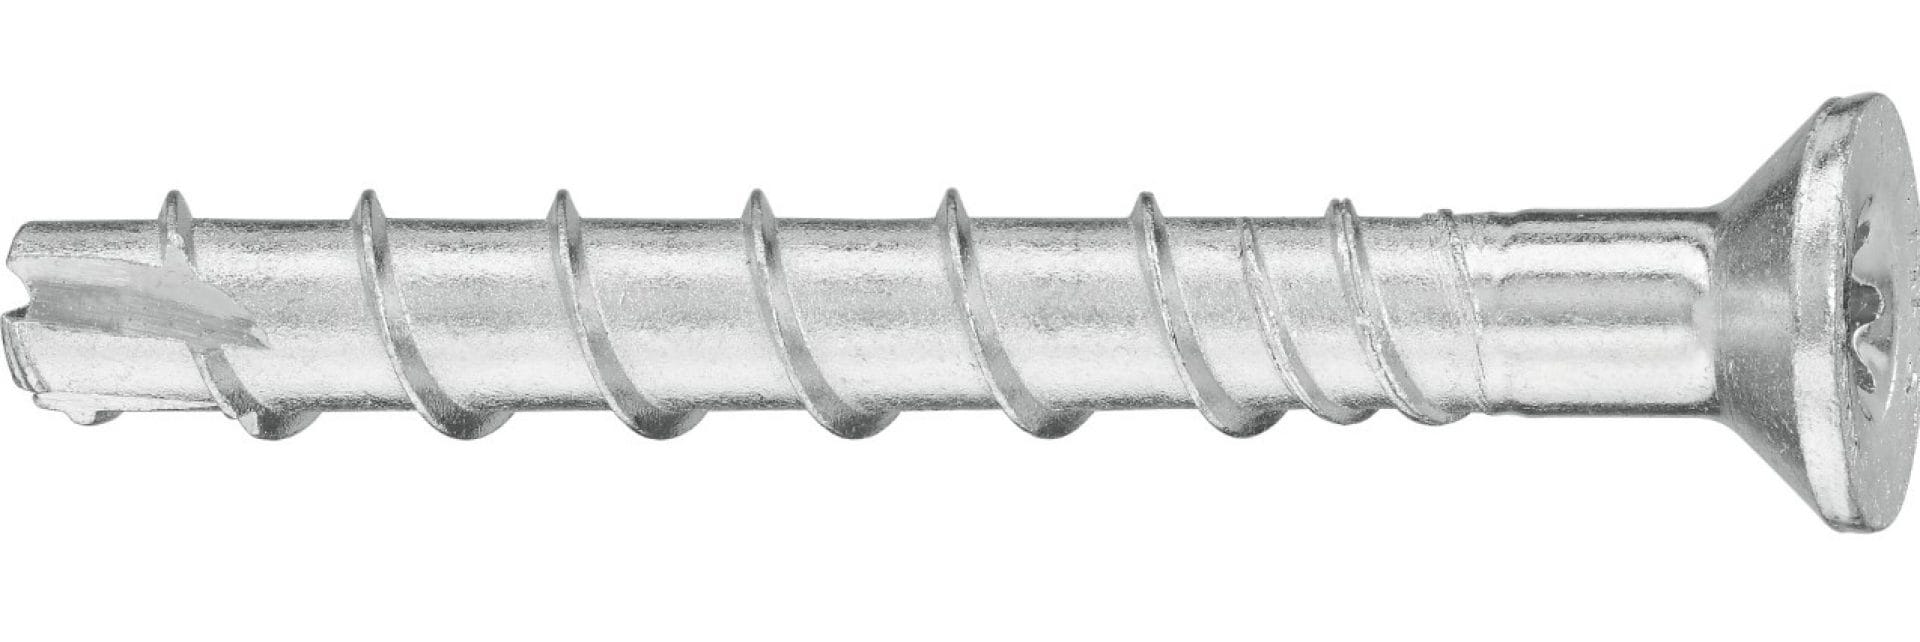 HUS screw anchor (carbon steel)